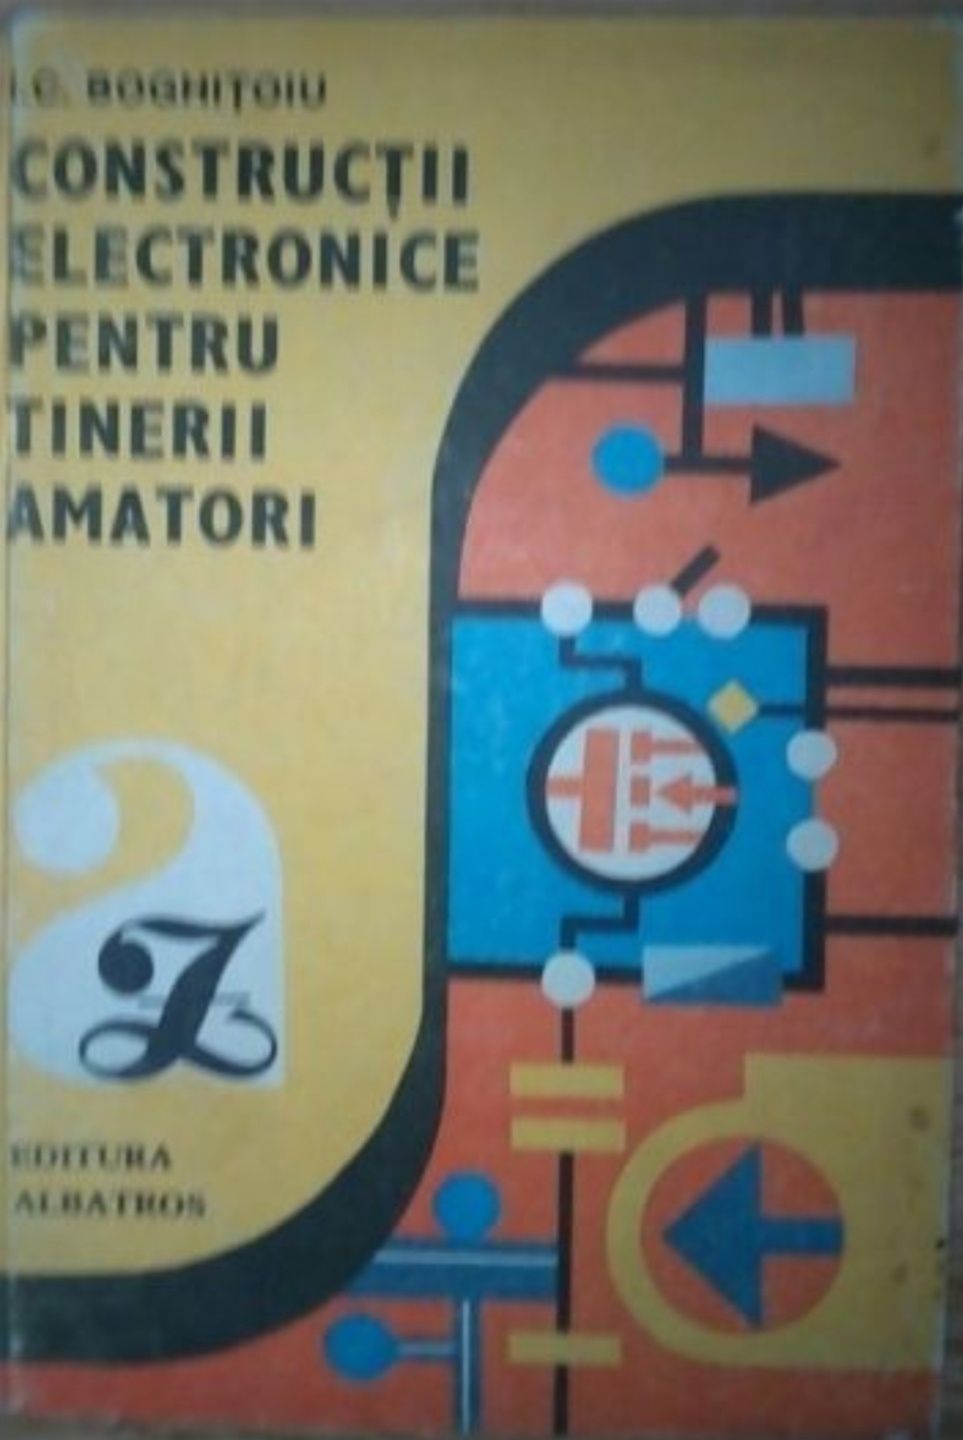 Constructii electronice pentru tinerii amatori - I.C.Boghitoiu.